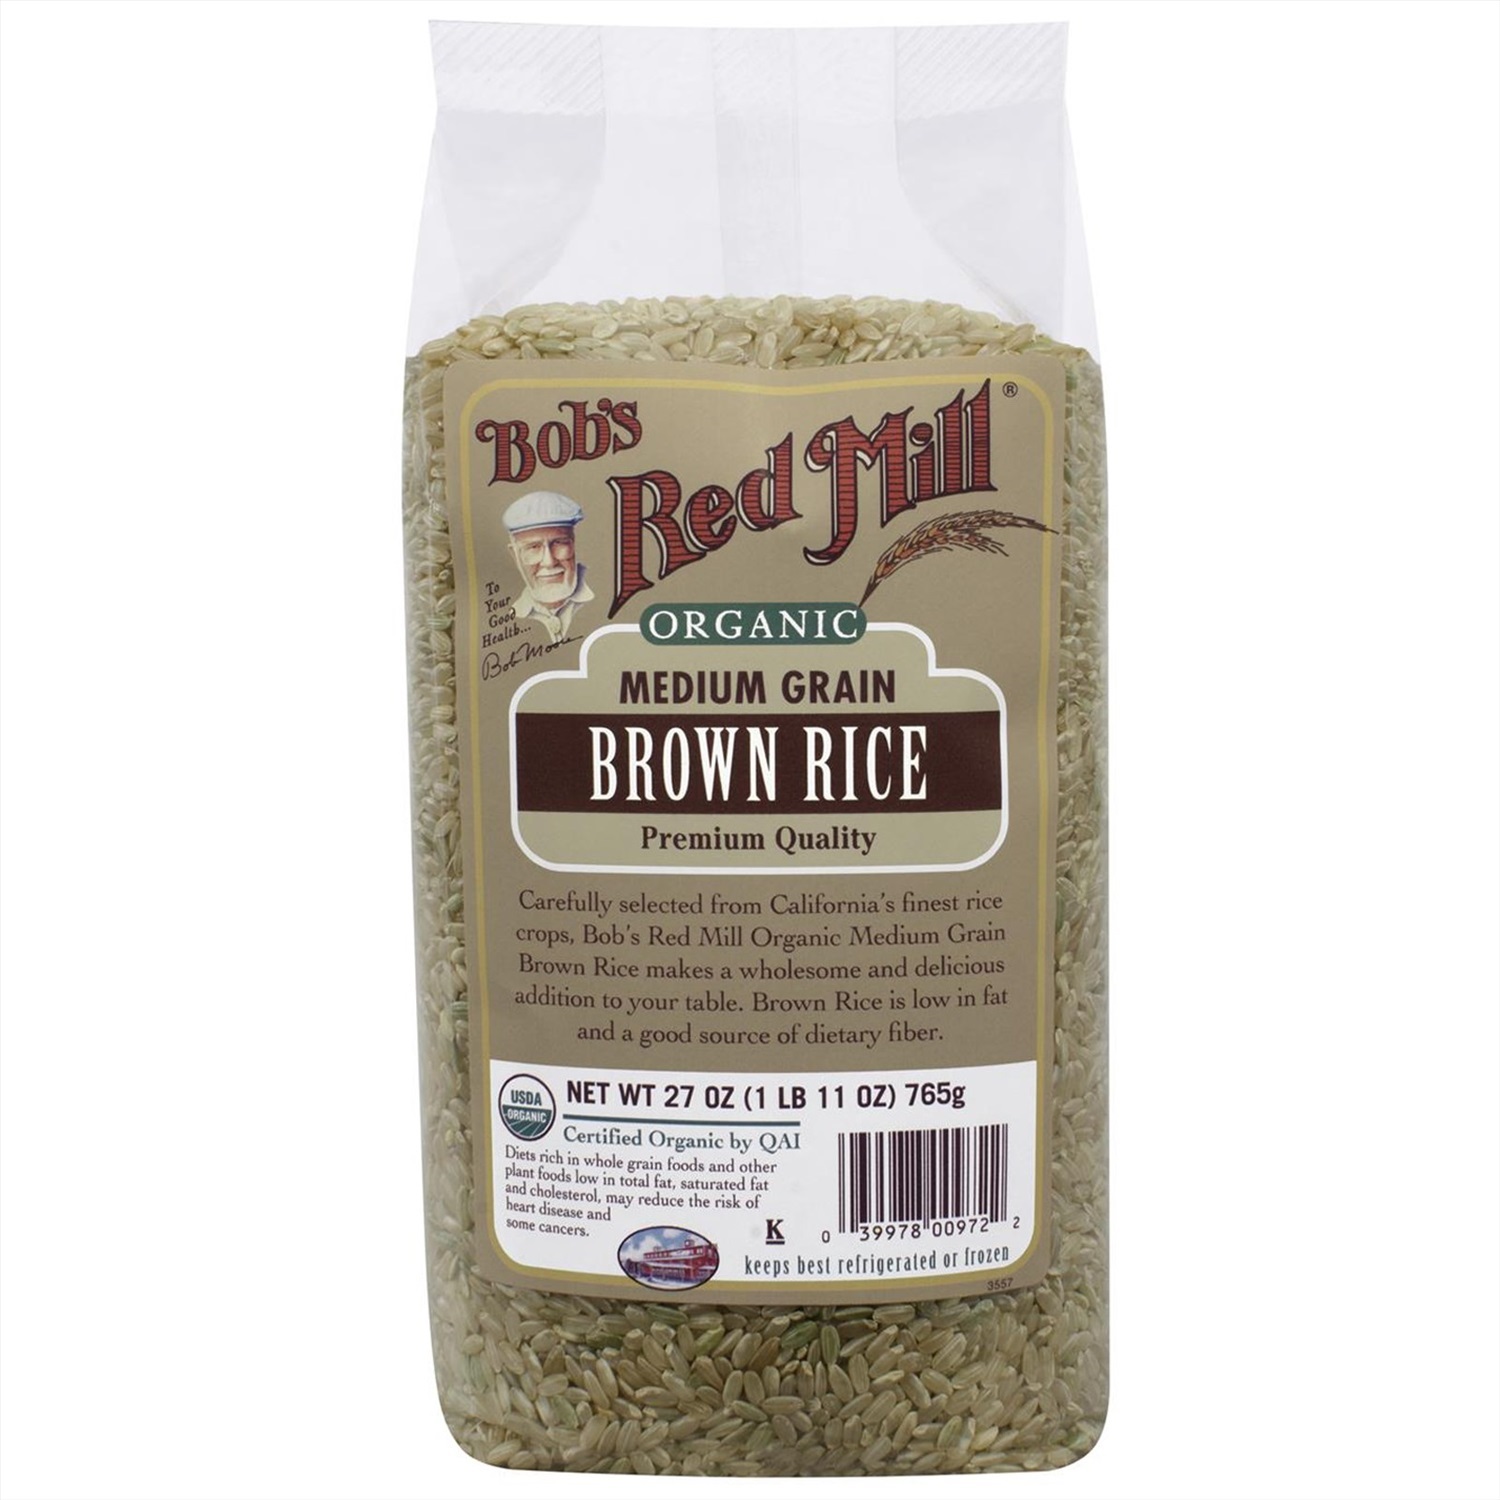 Massa organics brown rice